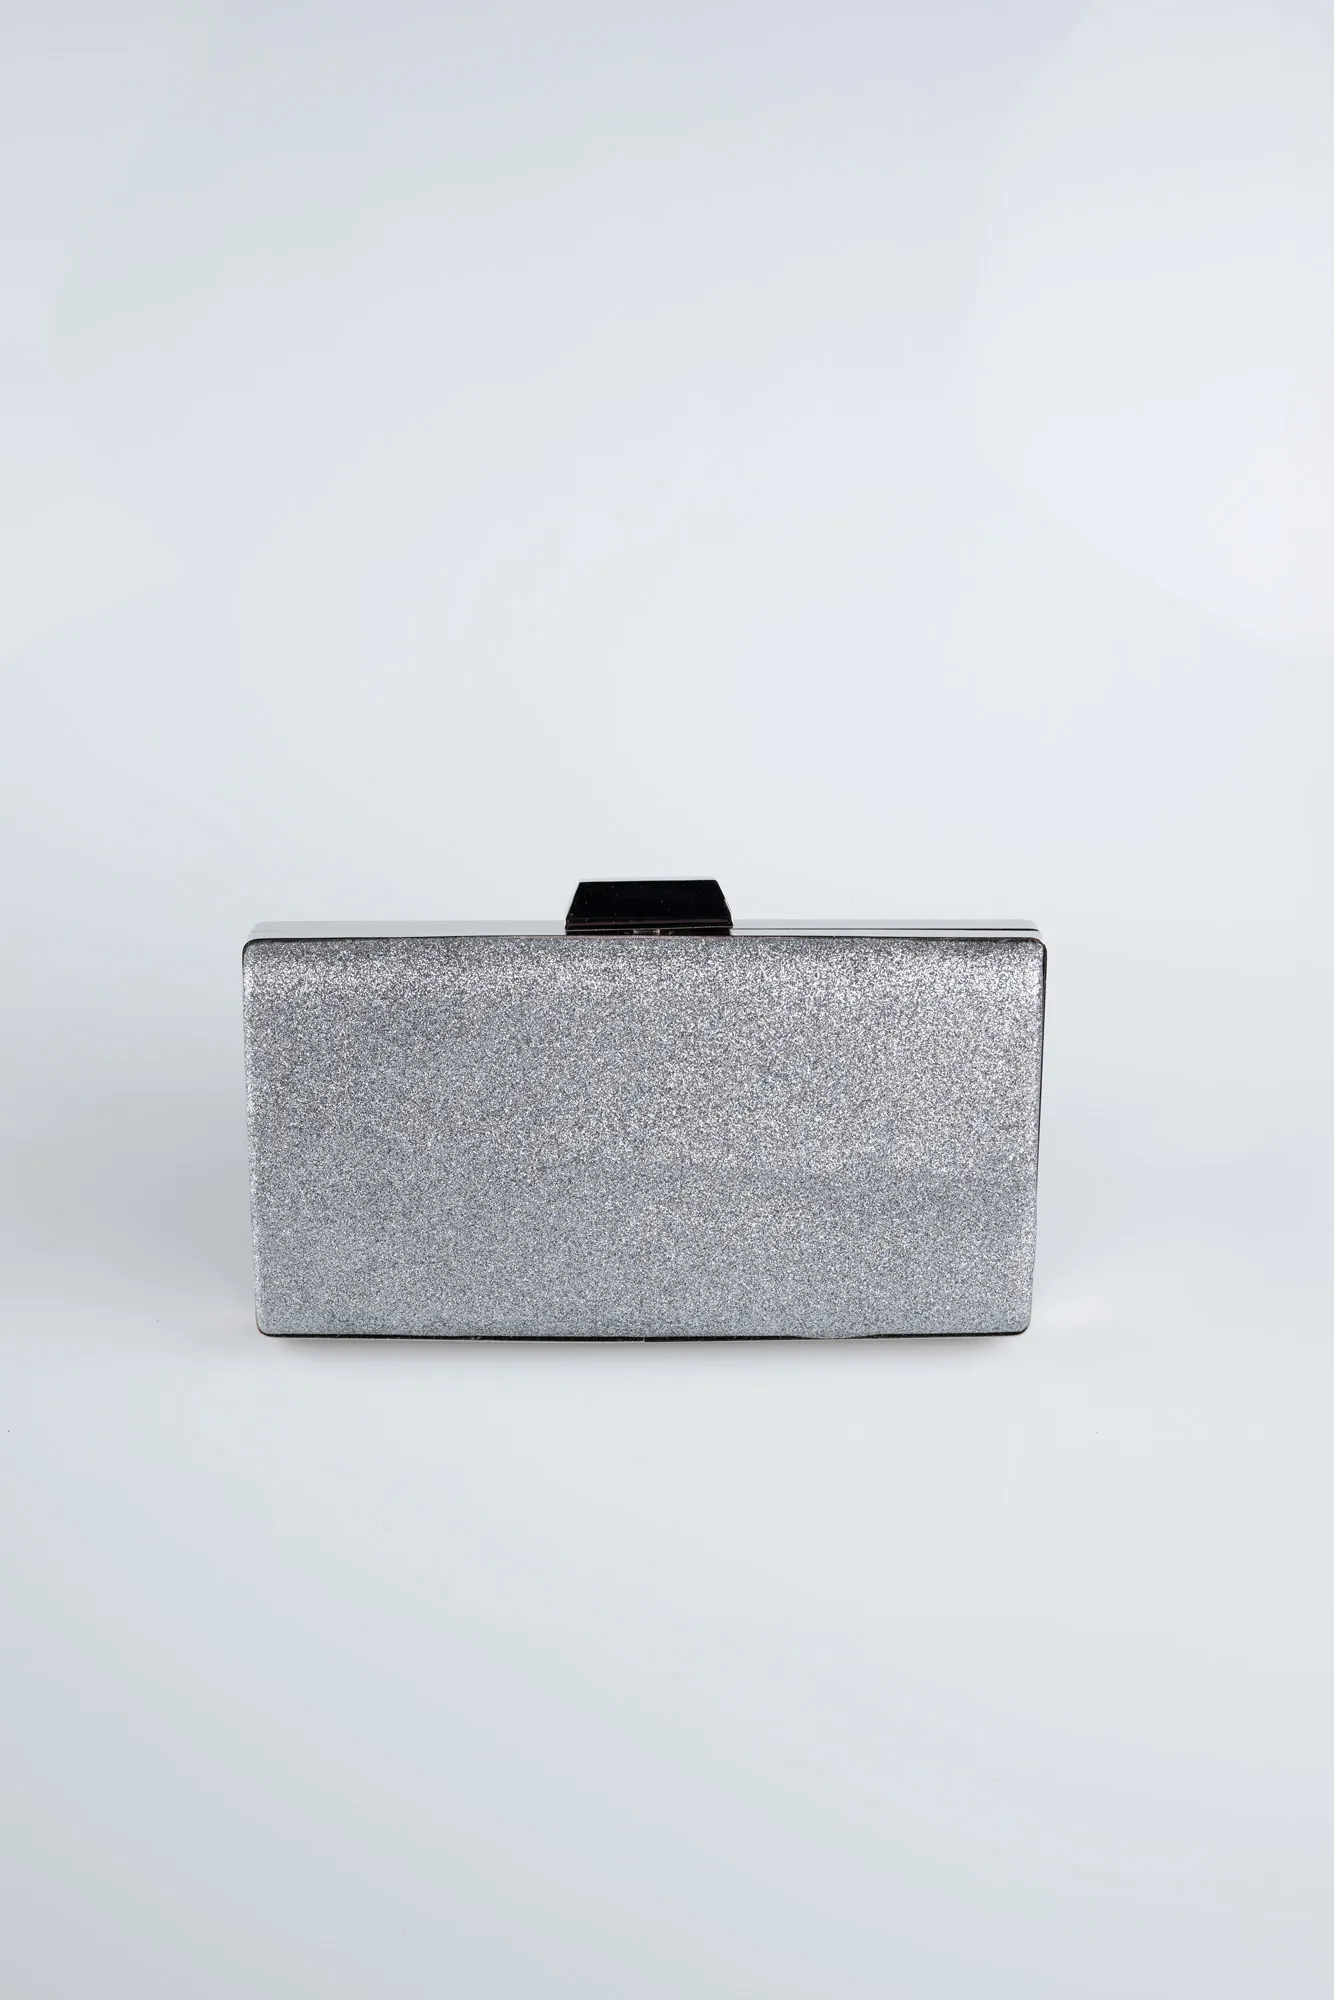 Anthracite-Box Bag SH813